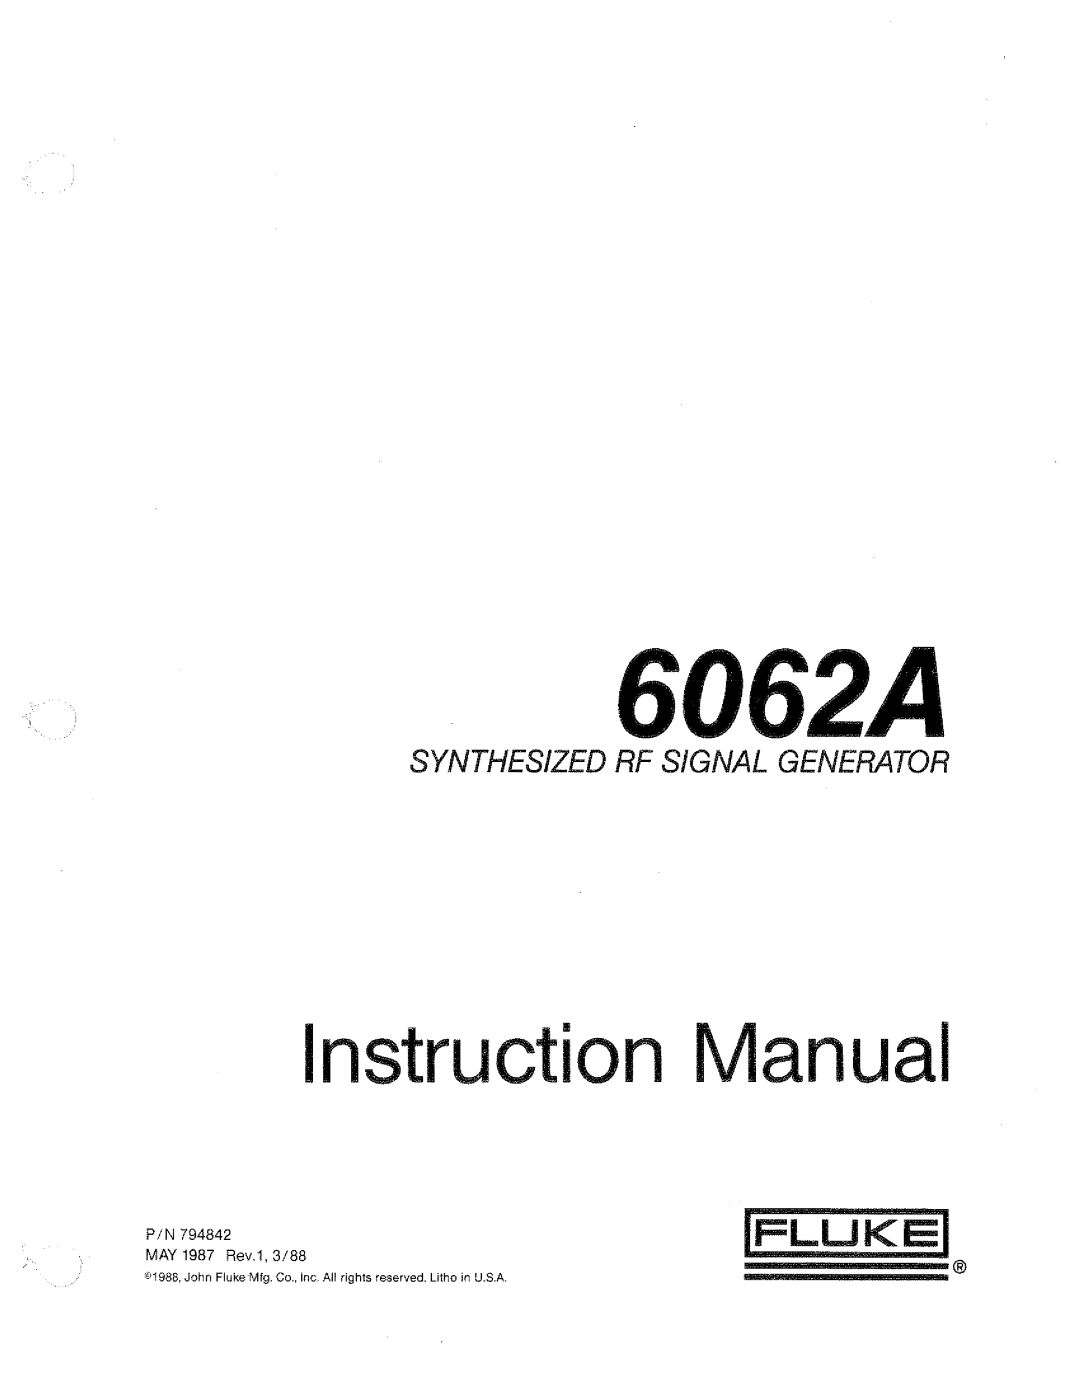 Fluke 6062a manual 